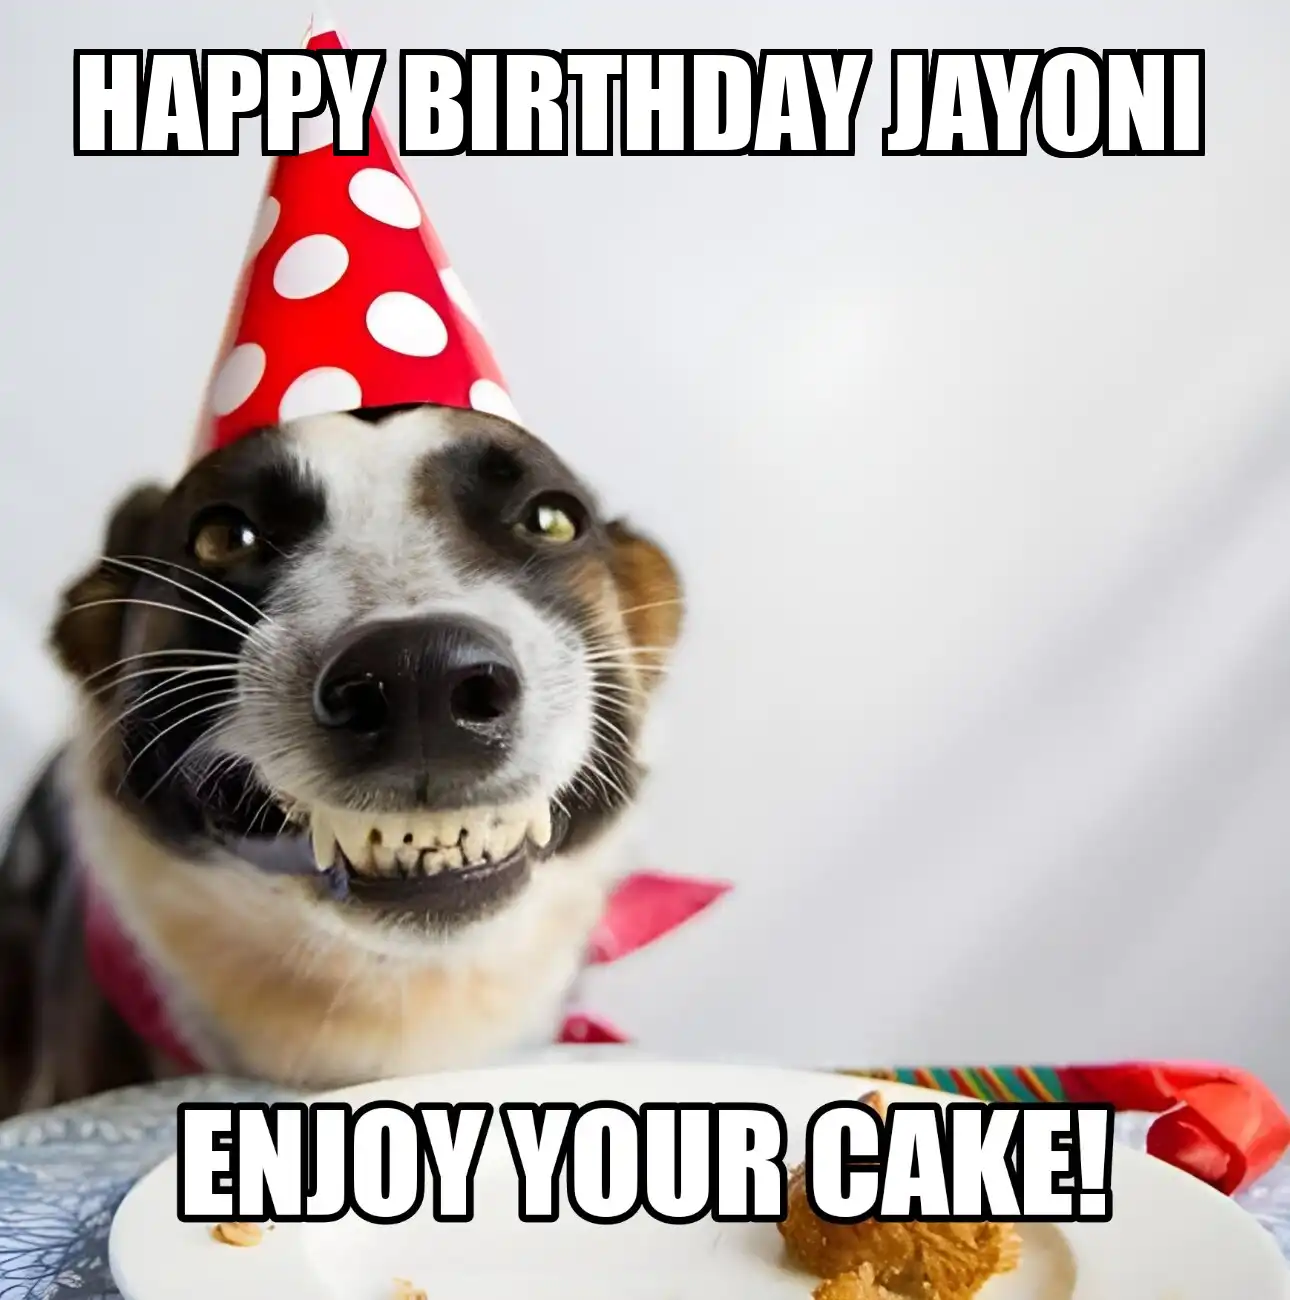 Happy Birthday Jayoni Enjoy Your Cake Dog Meme